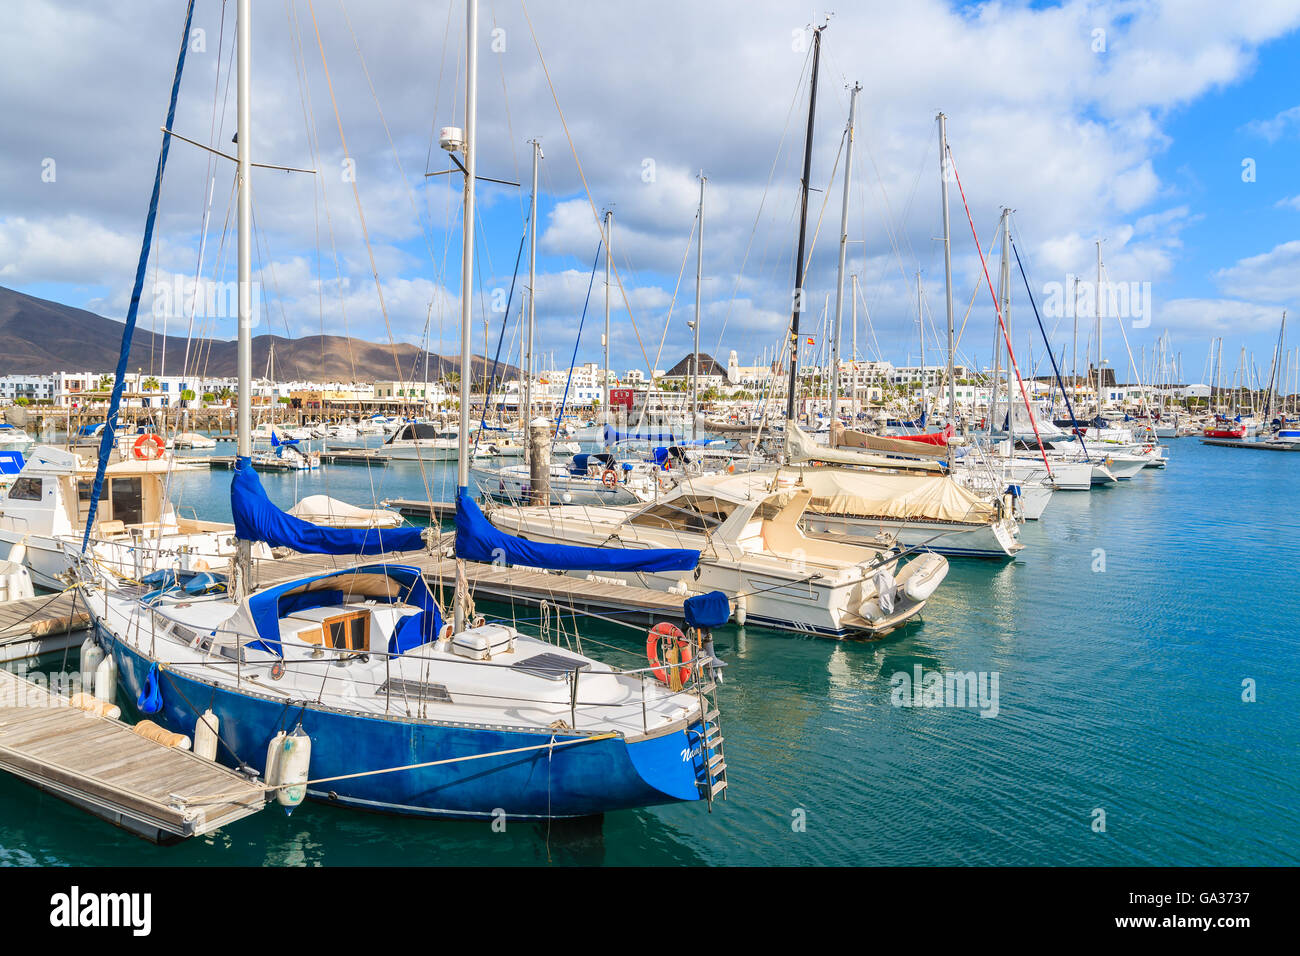 PLAYA BLANCA PORT, LANZAROTE ISLAND - JAN 17, 2015: yacht boats in Playa Blanca harbour on sunny day. Lanzarote is very popular tourist destination among Canary Islands archipelago. Stock Photo